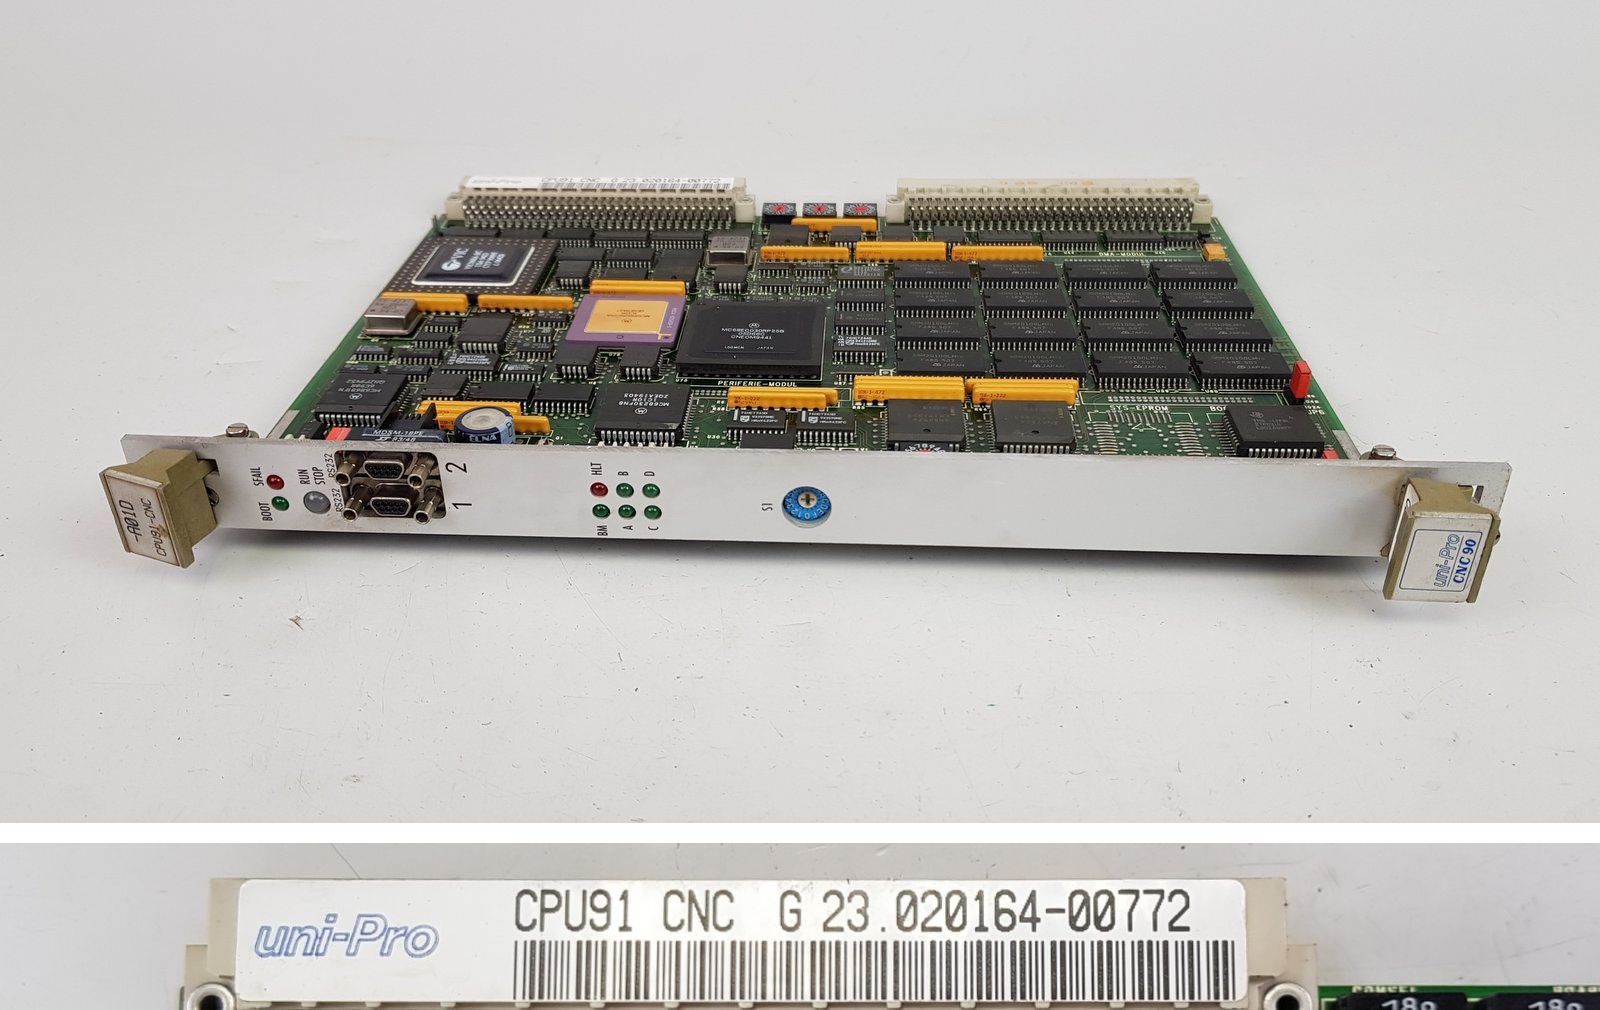 PP6609 Heller Uni-Pro CPU91 CNC G 23.020164-00772